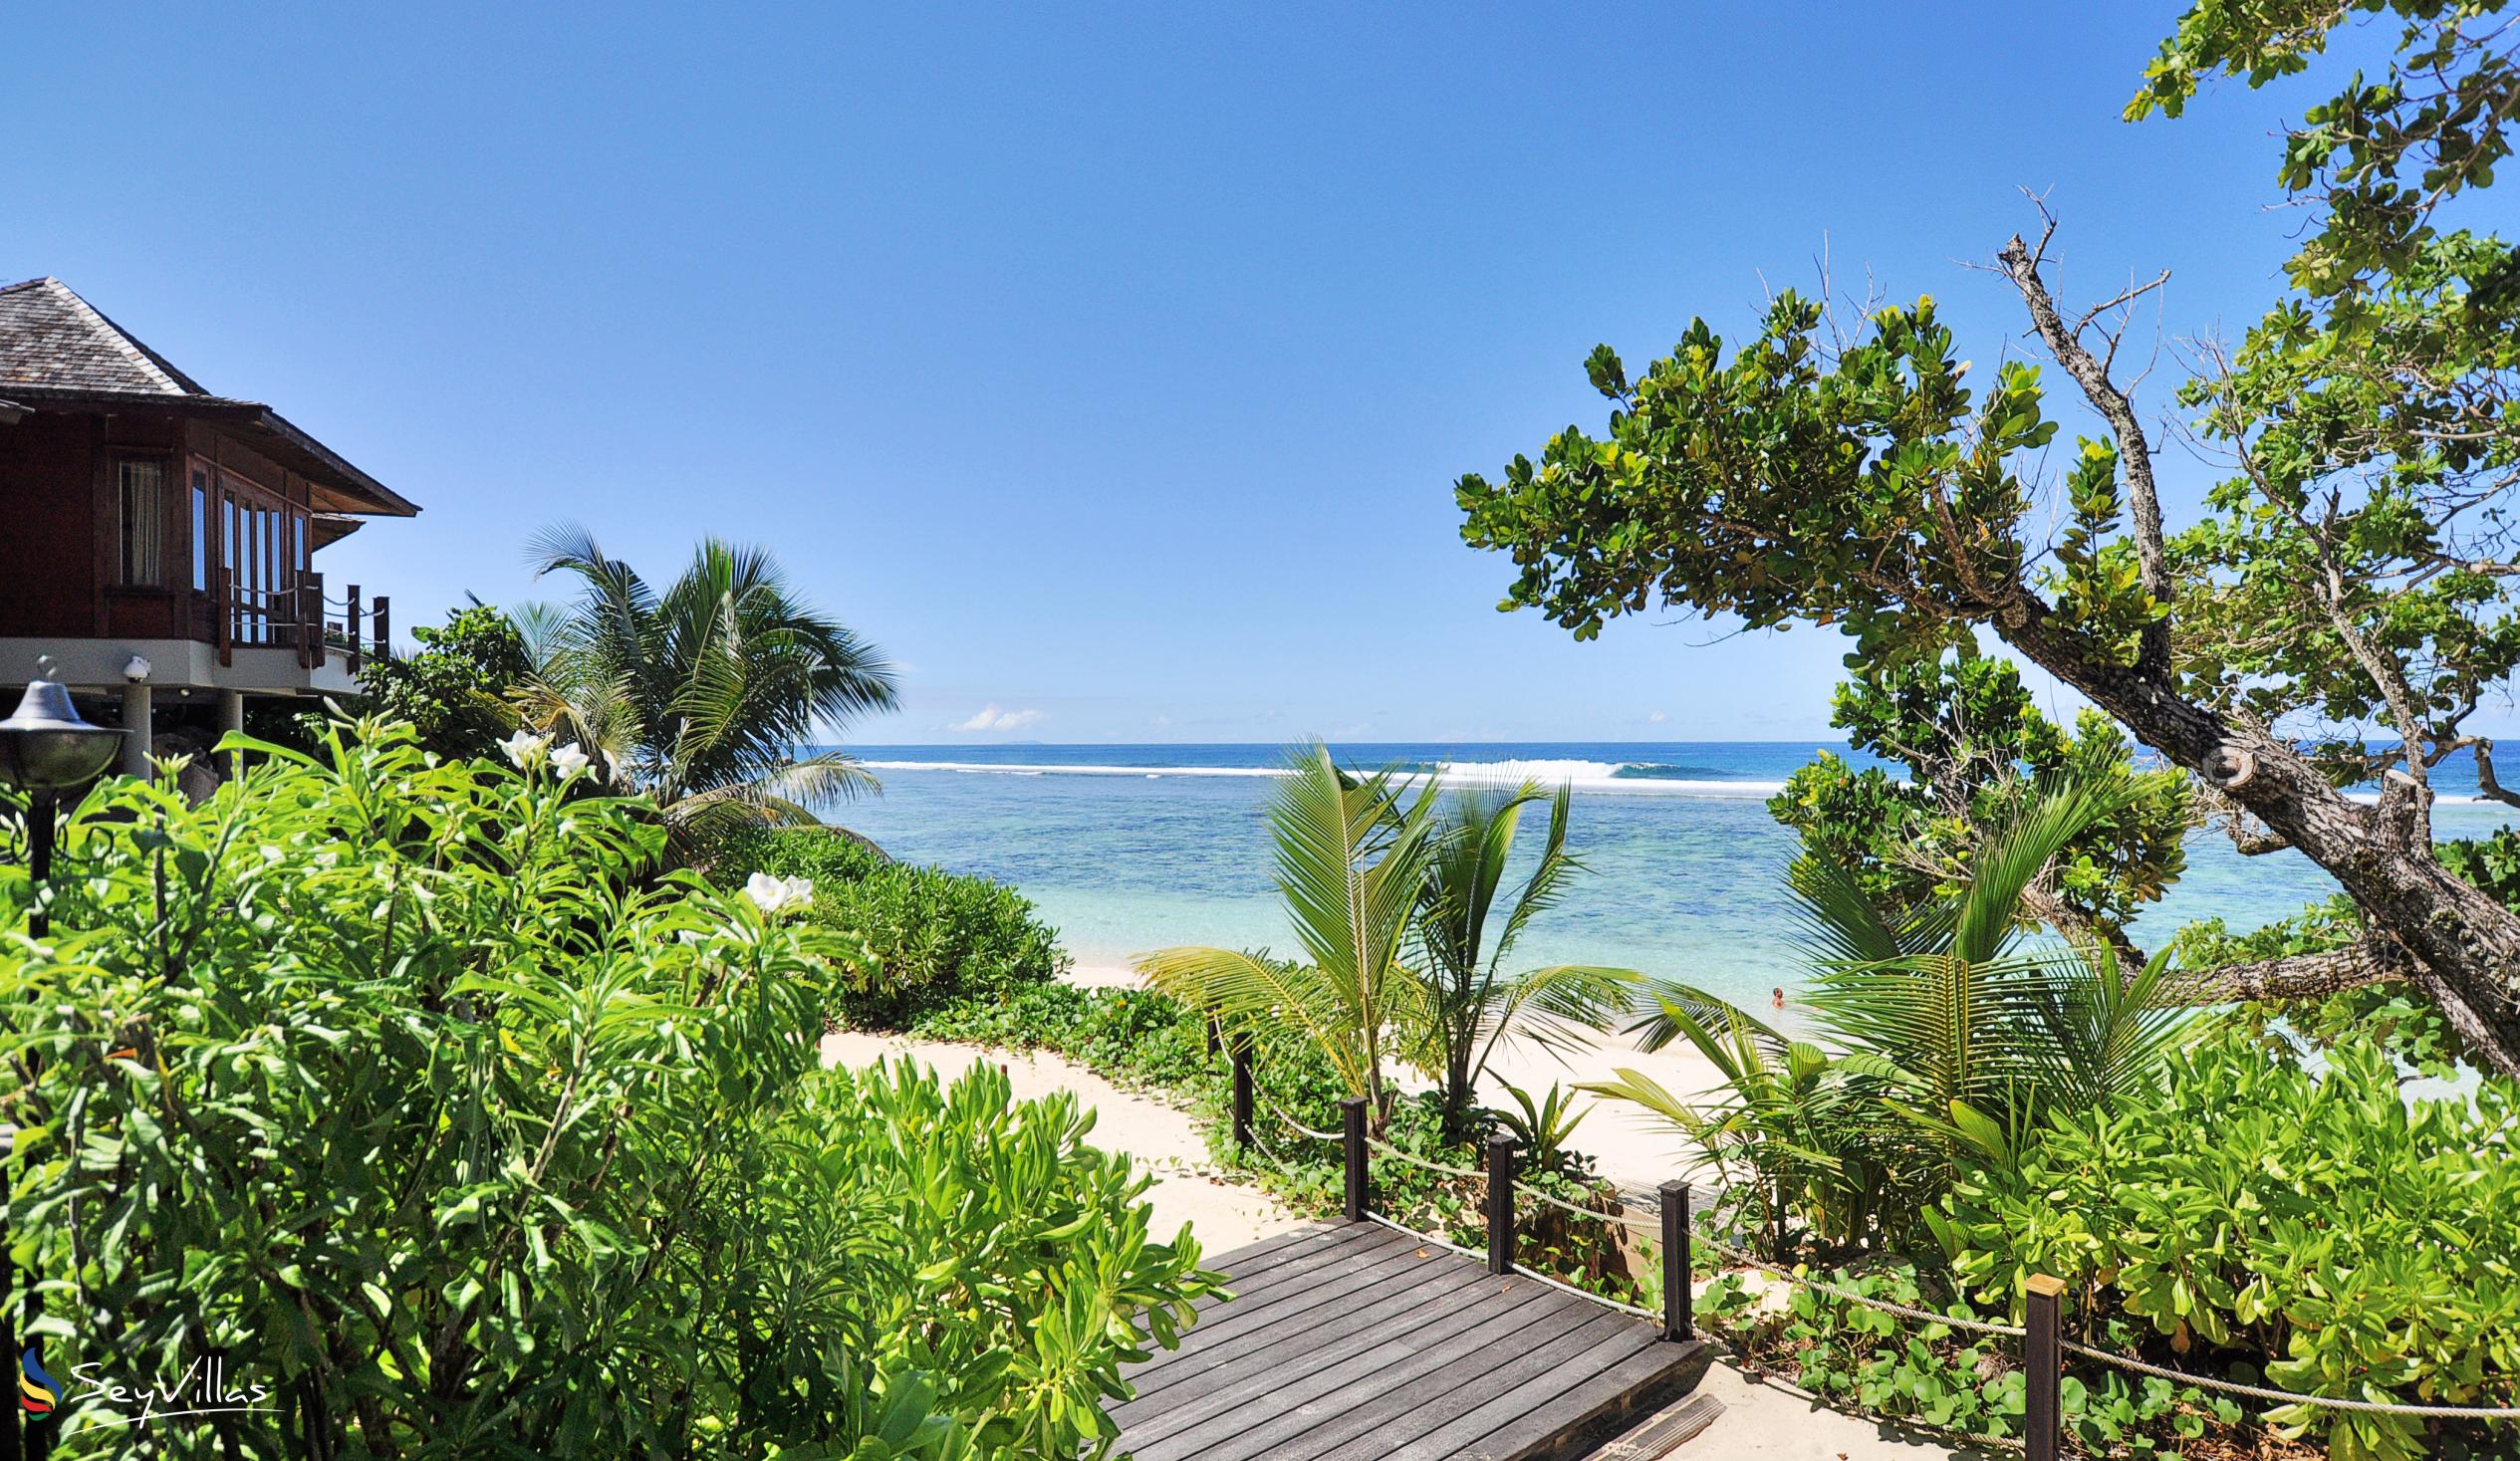 Foto 58: Double Tree by Hilton - Allamanda Resort & Spa - Lage - Mahé (Seychellen)